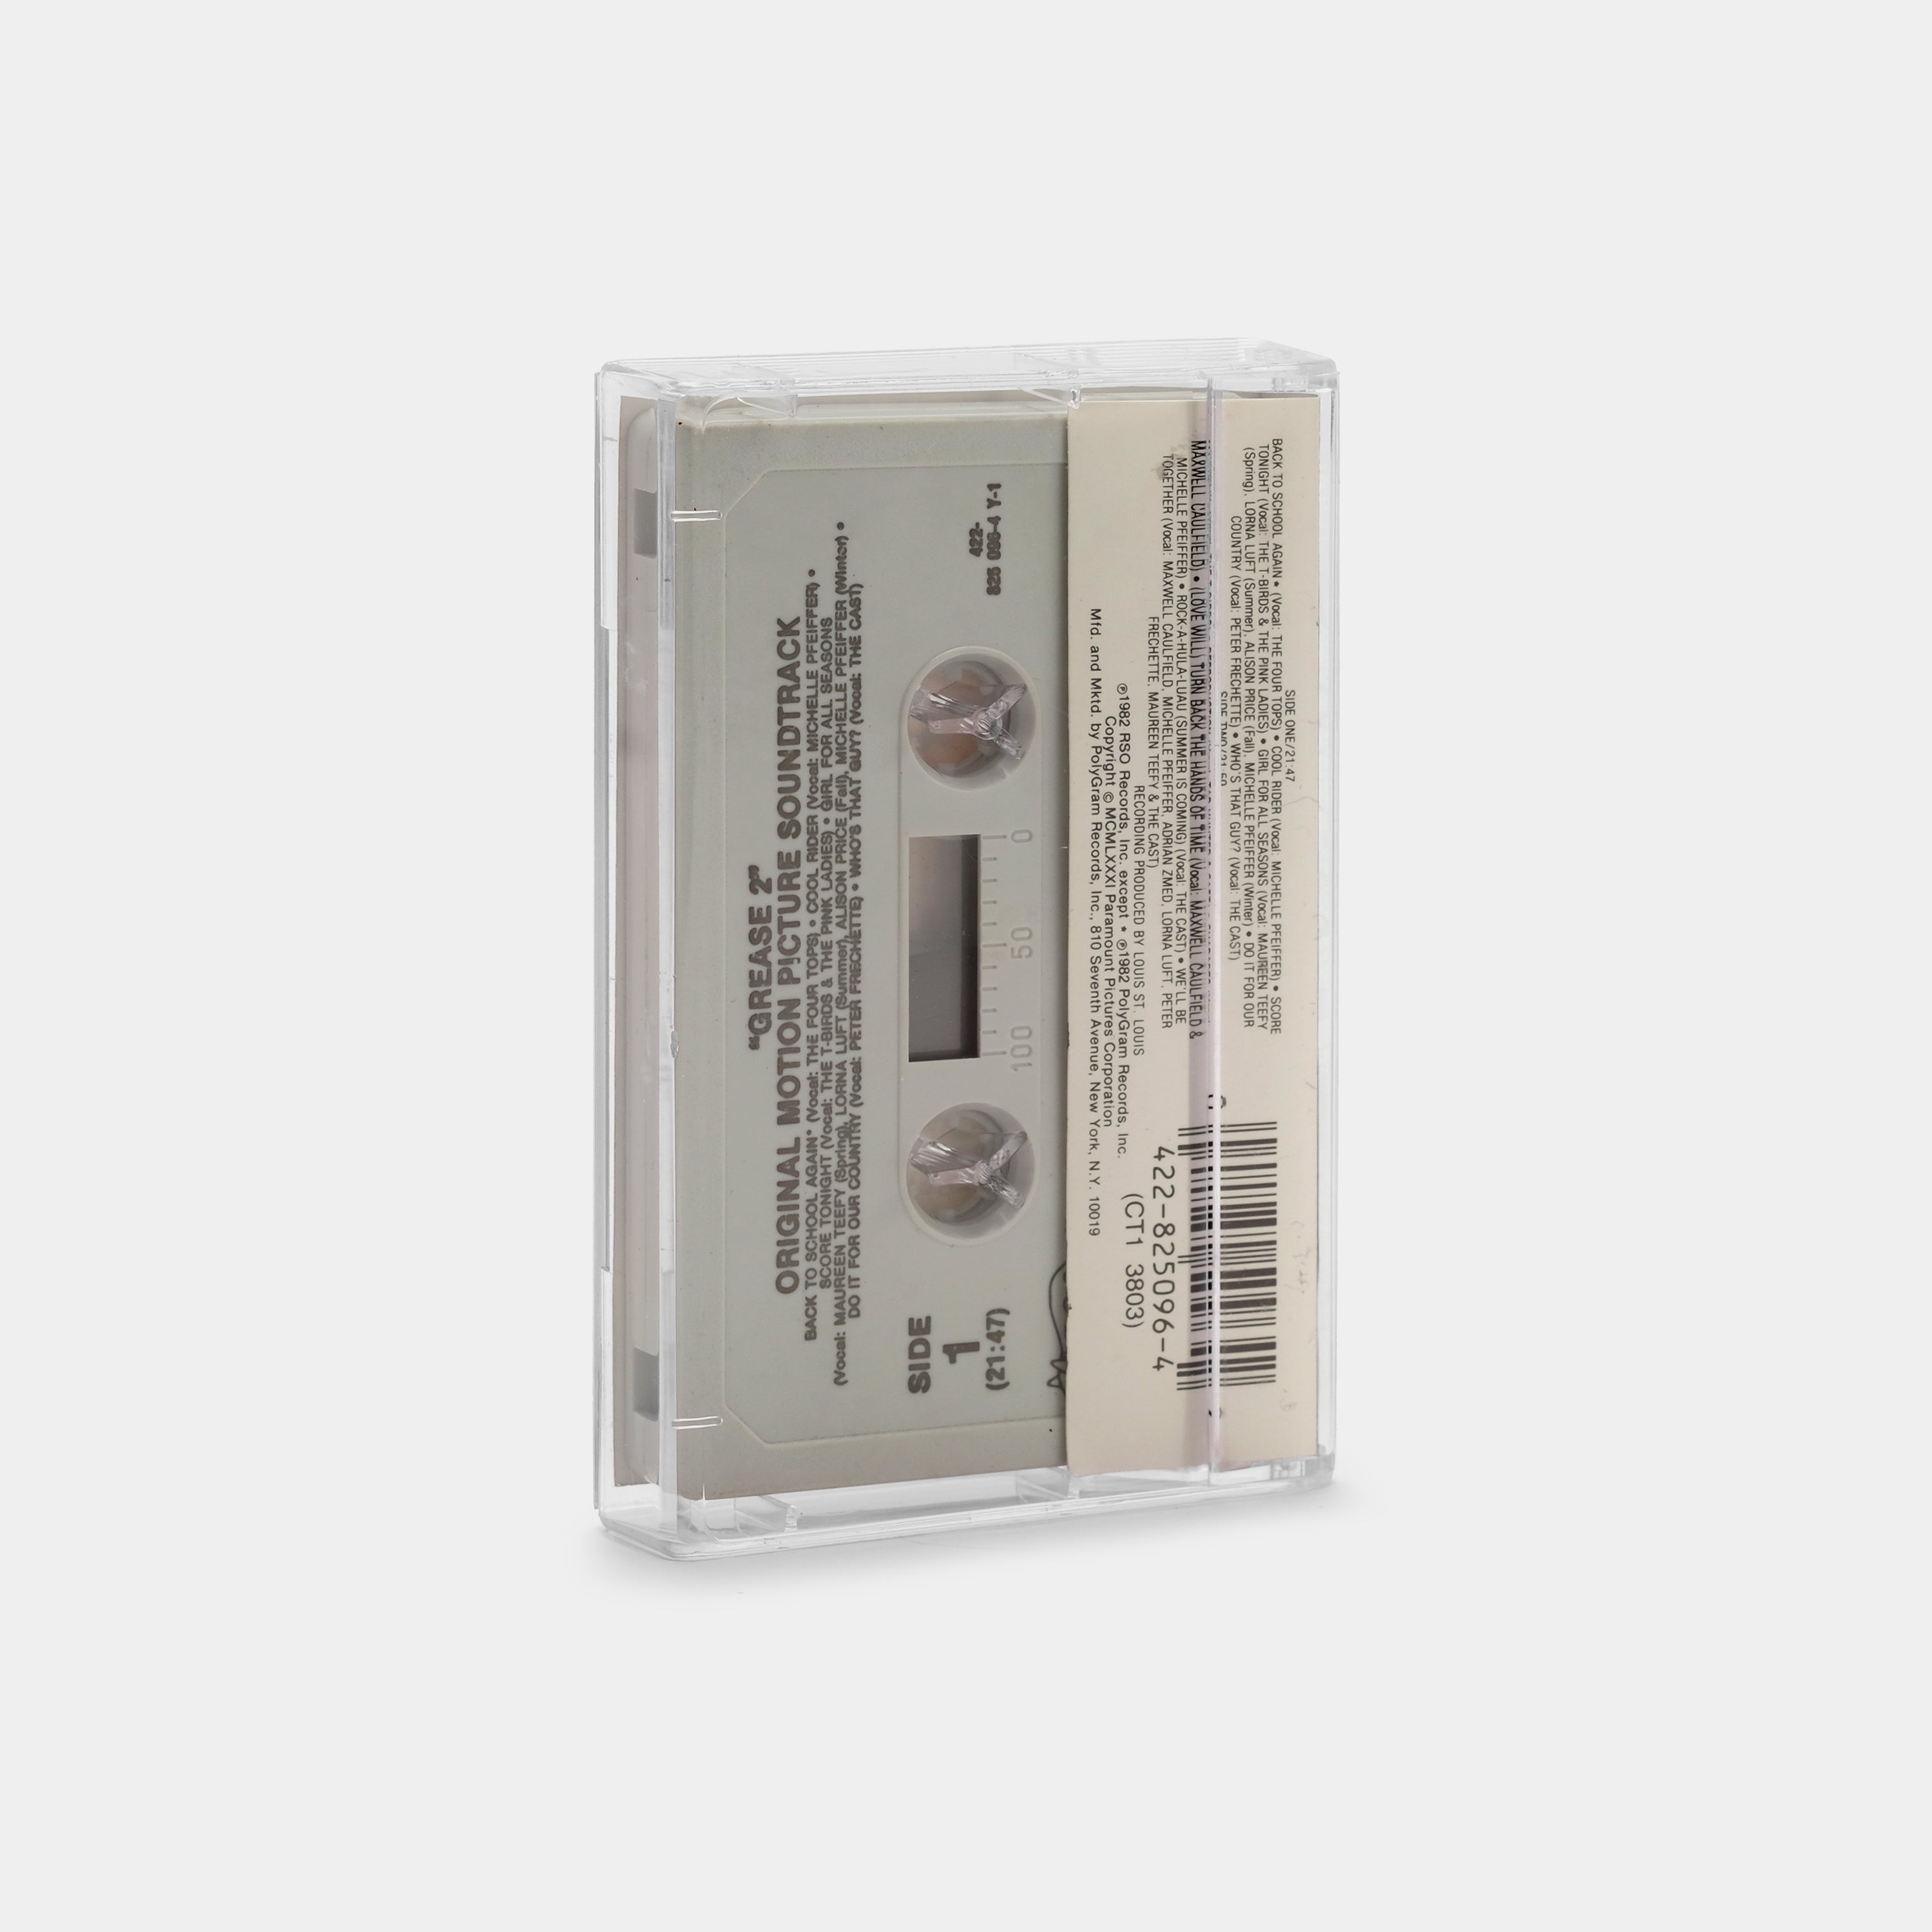 Grease 2 (Original Motion Picture Soundtrack) Cassette Tape